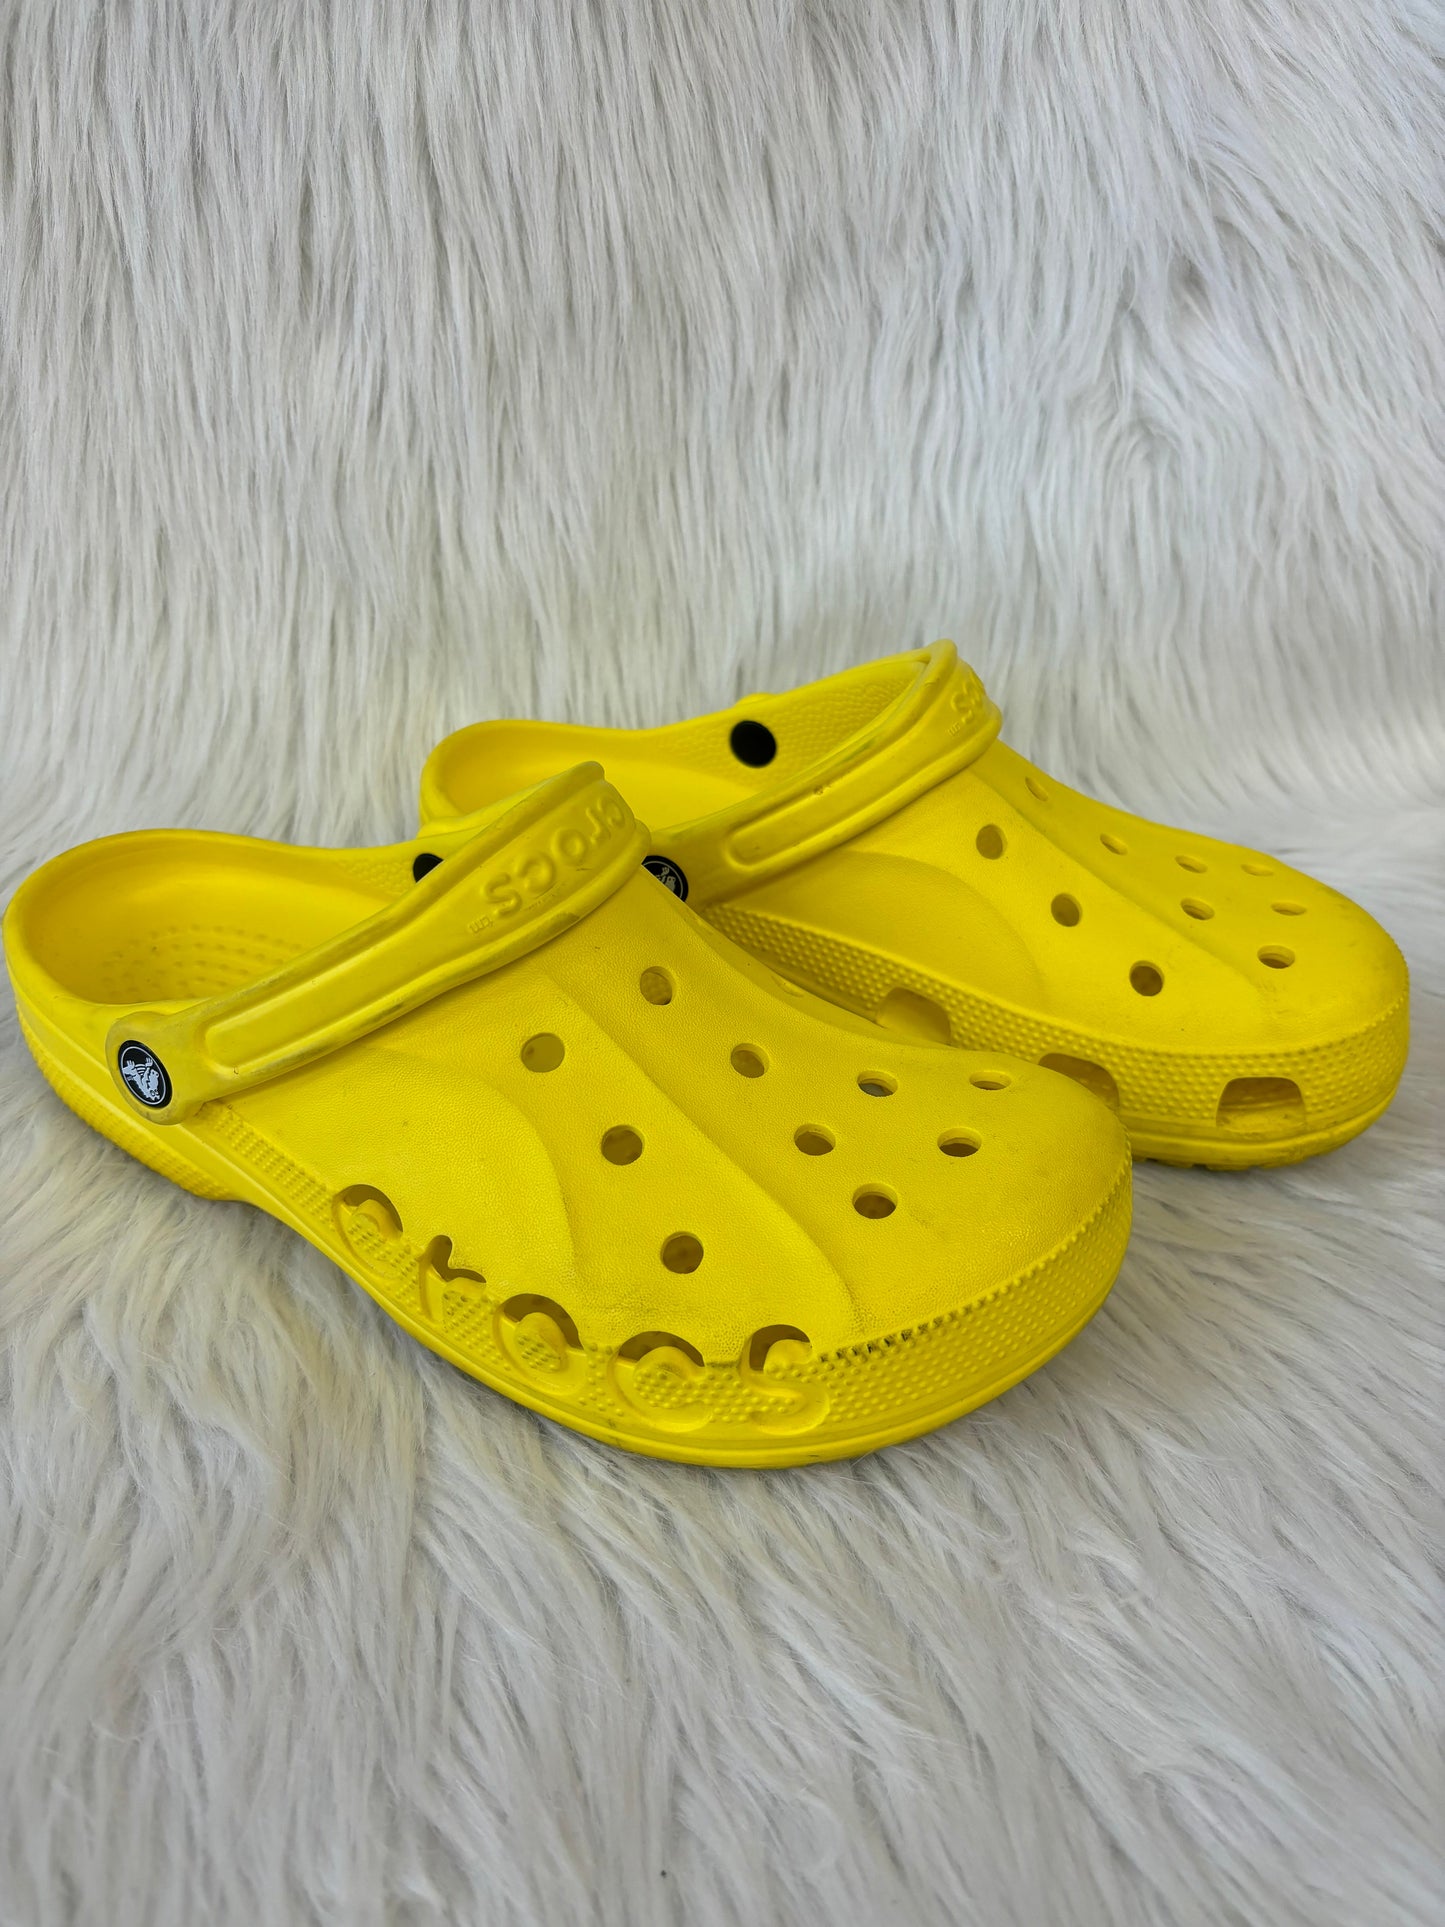 Yellow Shoes Flats Crocs, Size 11